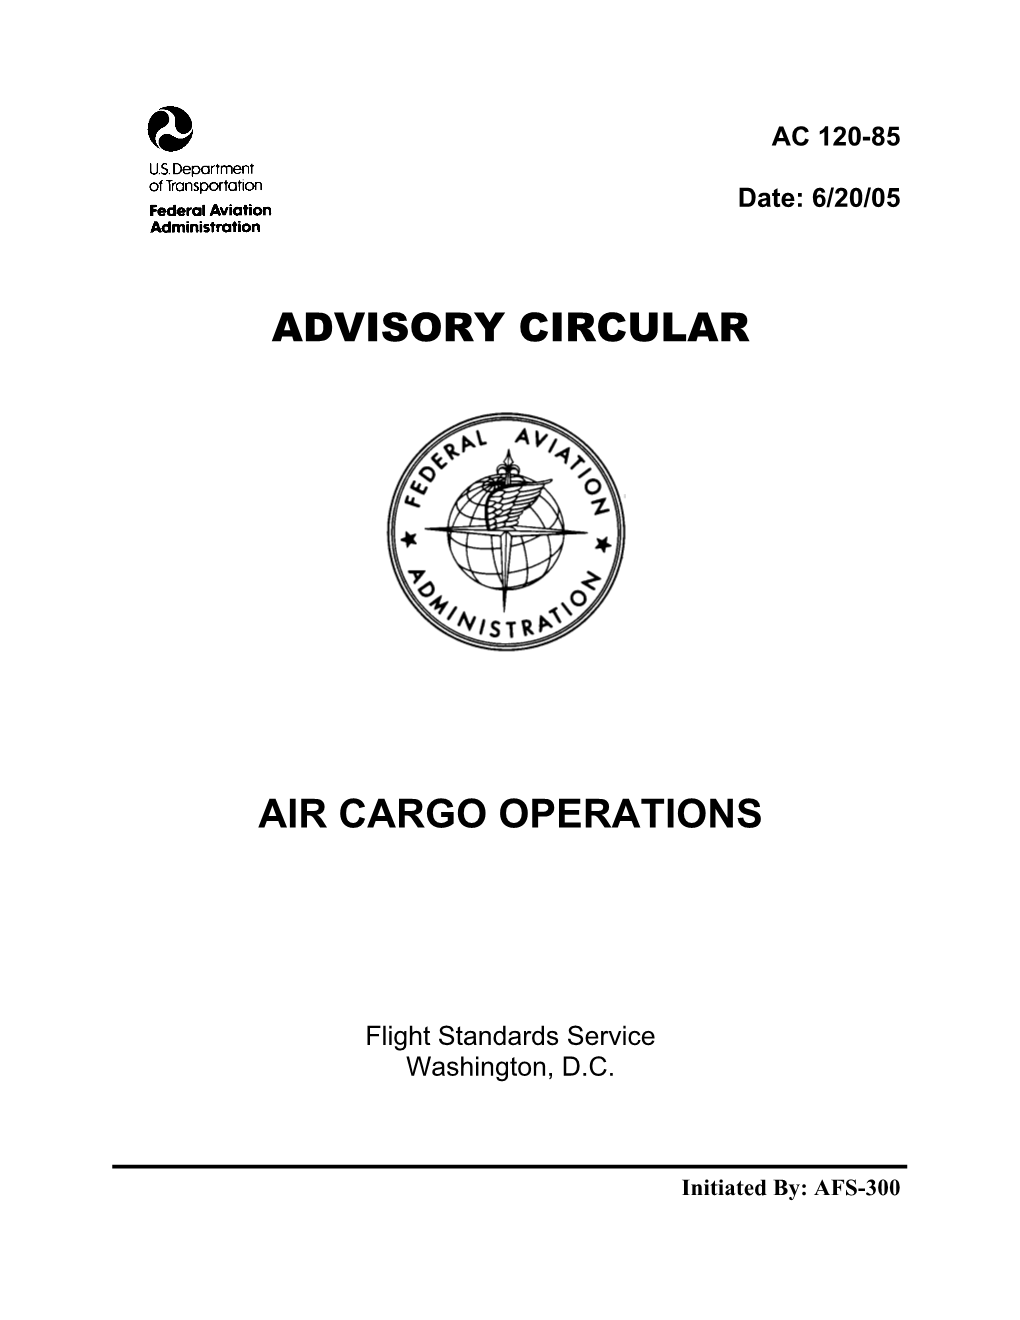 Advisory Circular Air Cargo Operations